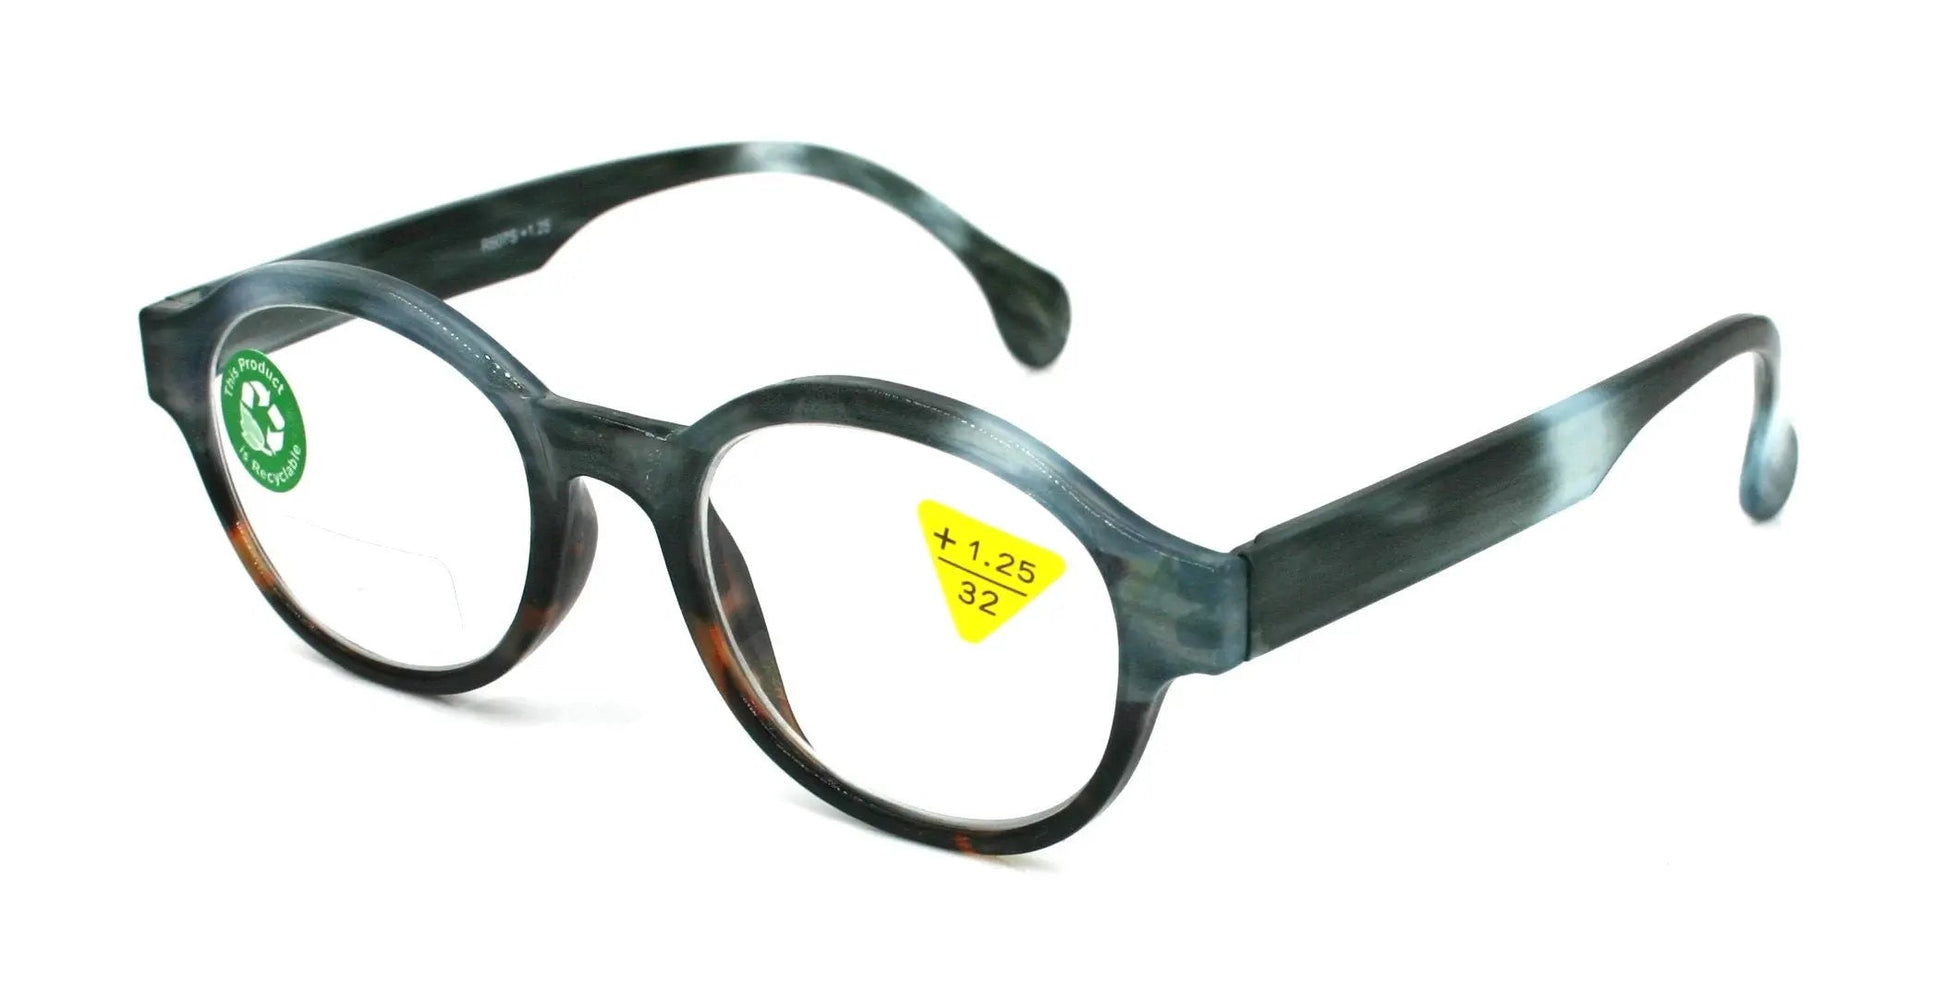 The ALCHEMIST, (Premium) Reading Glasses, Round Frame  +1.25 .. +3 Magnifying Eyeglasses (Marble Blue) Circle Style. NY Fifth Avenue